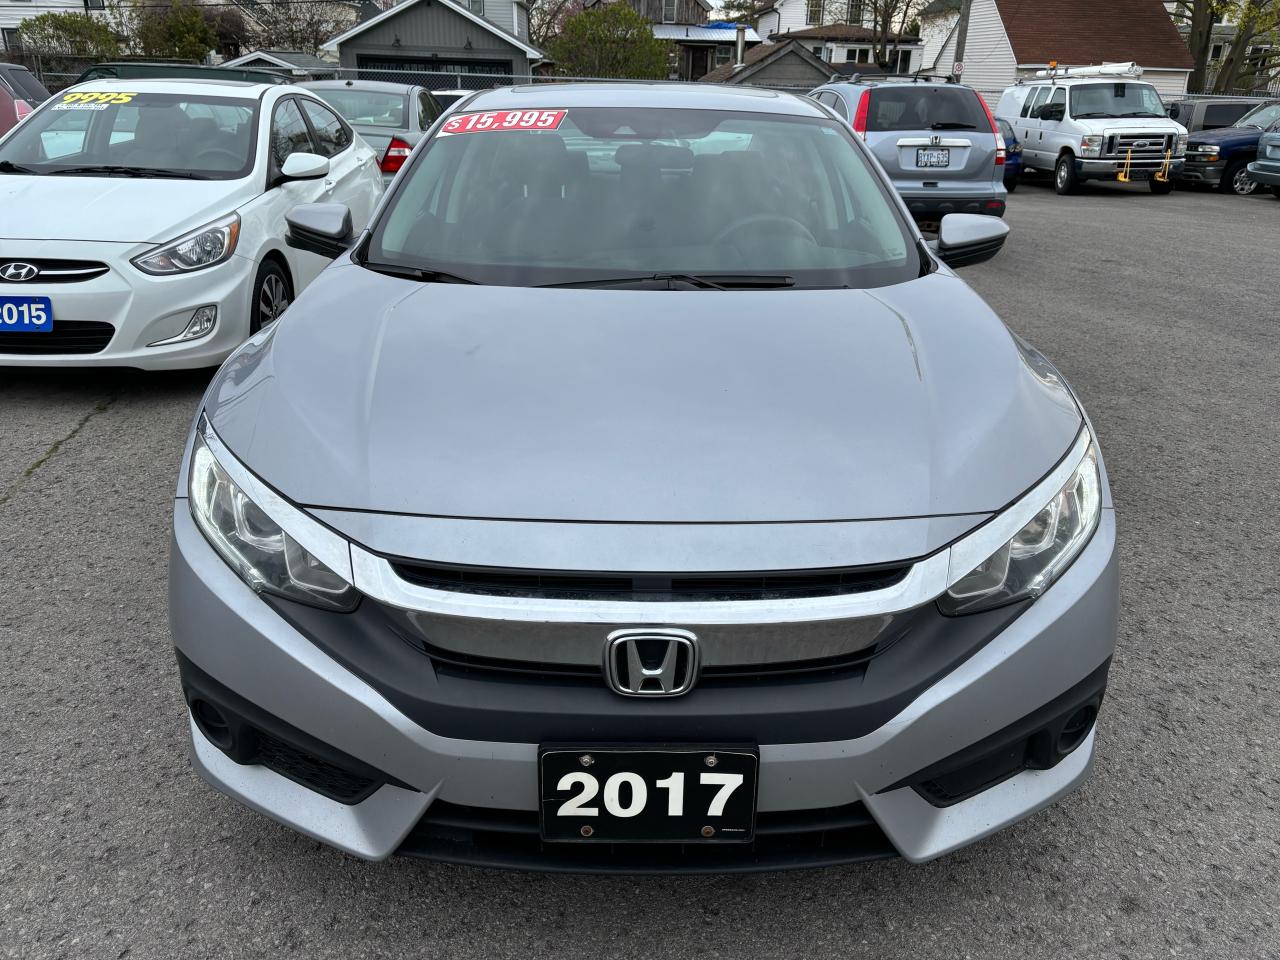 2017 Honda Civic EX, Alloys, Sunroof, Lane Departure Warning - Photo #3